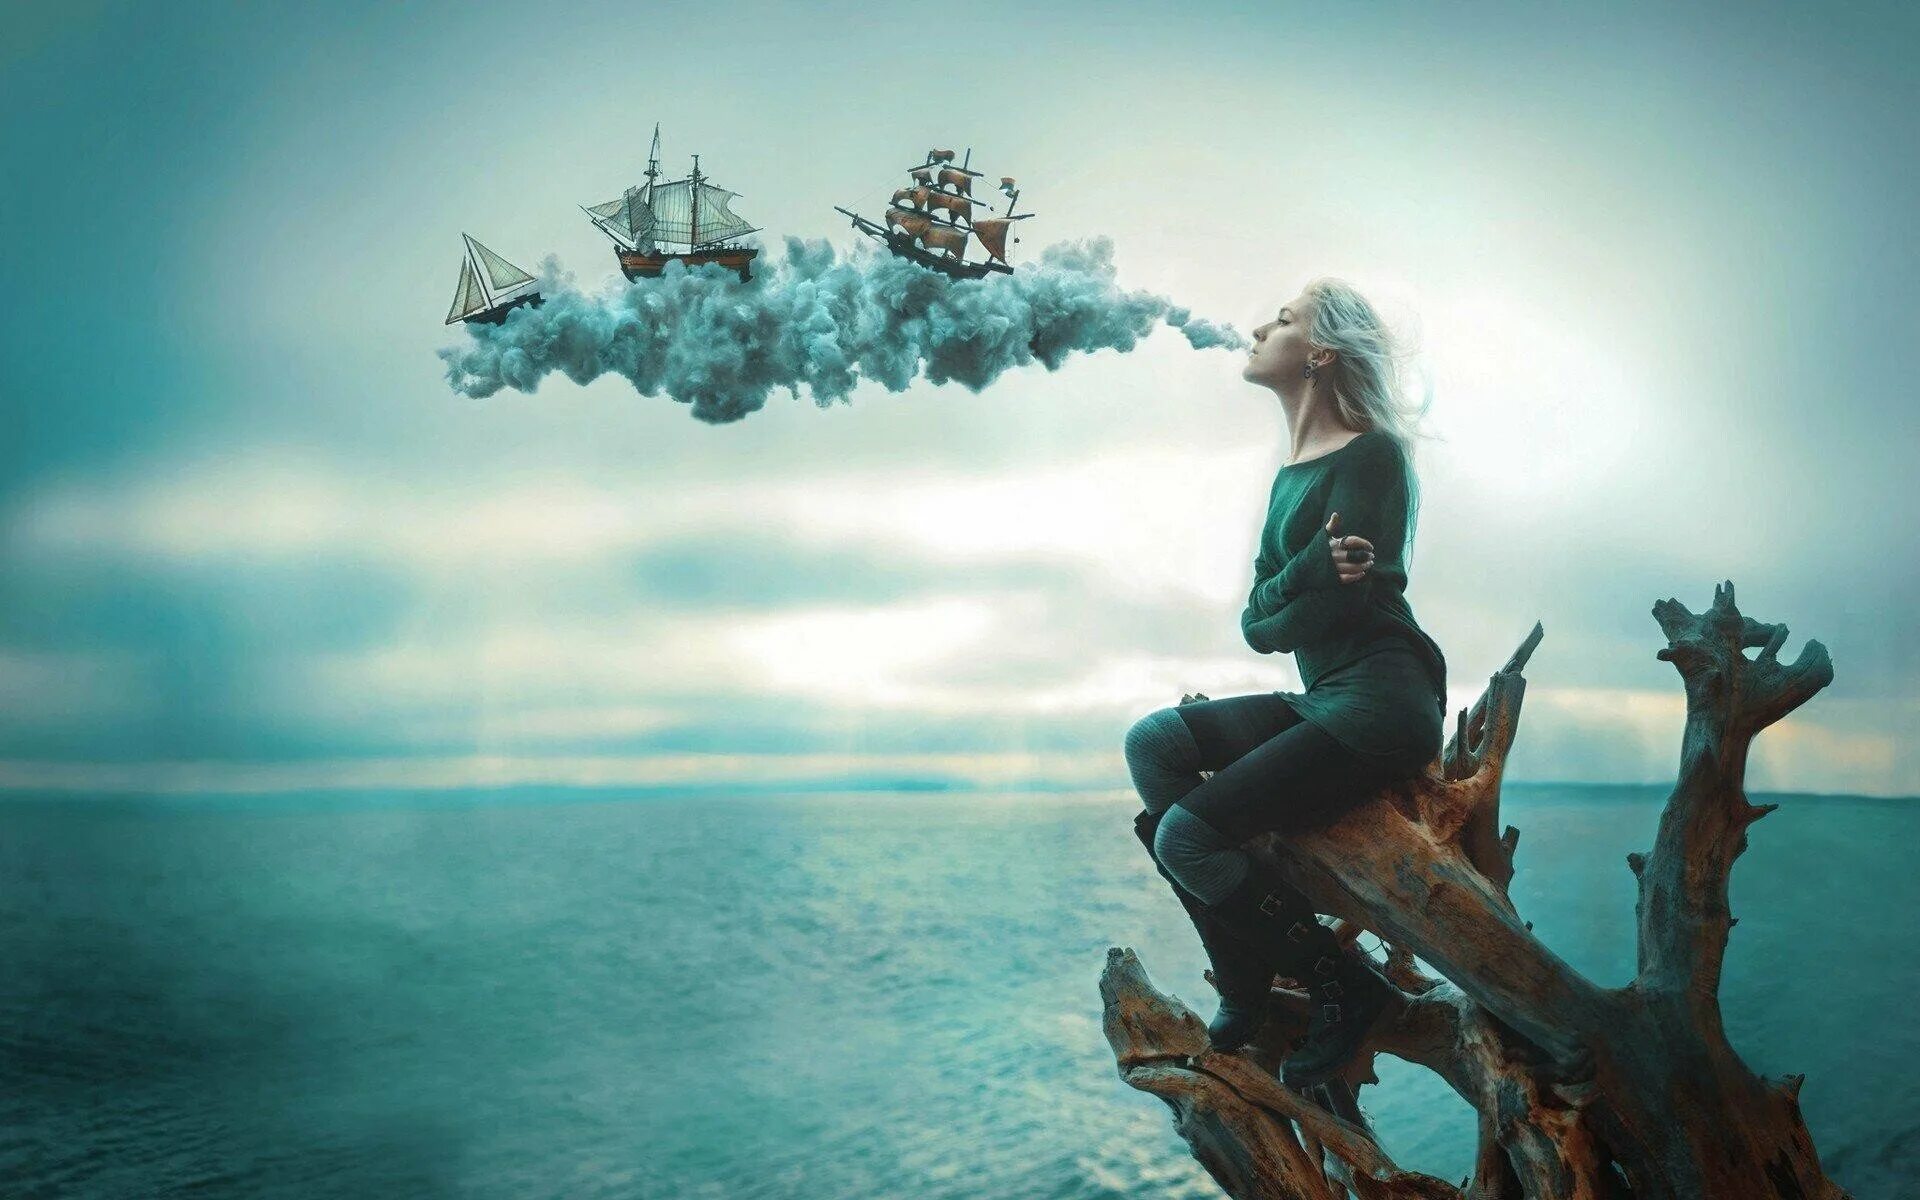 Дух вдохновения. Девушка на корабле. Девушка-море. Фотосессия в стиле фантастика. Фантастическое море.